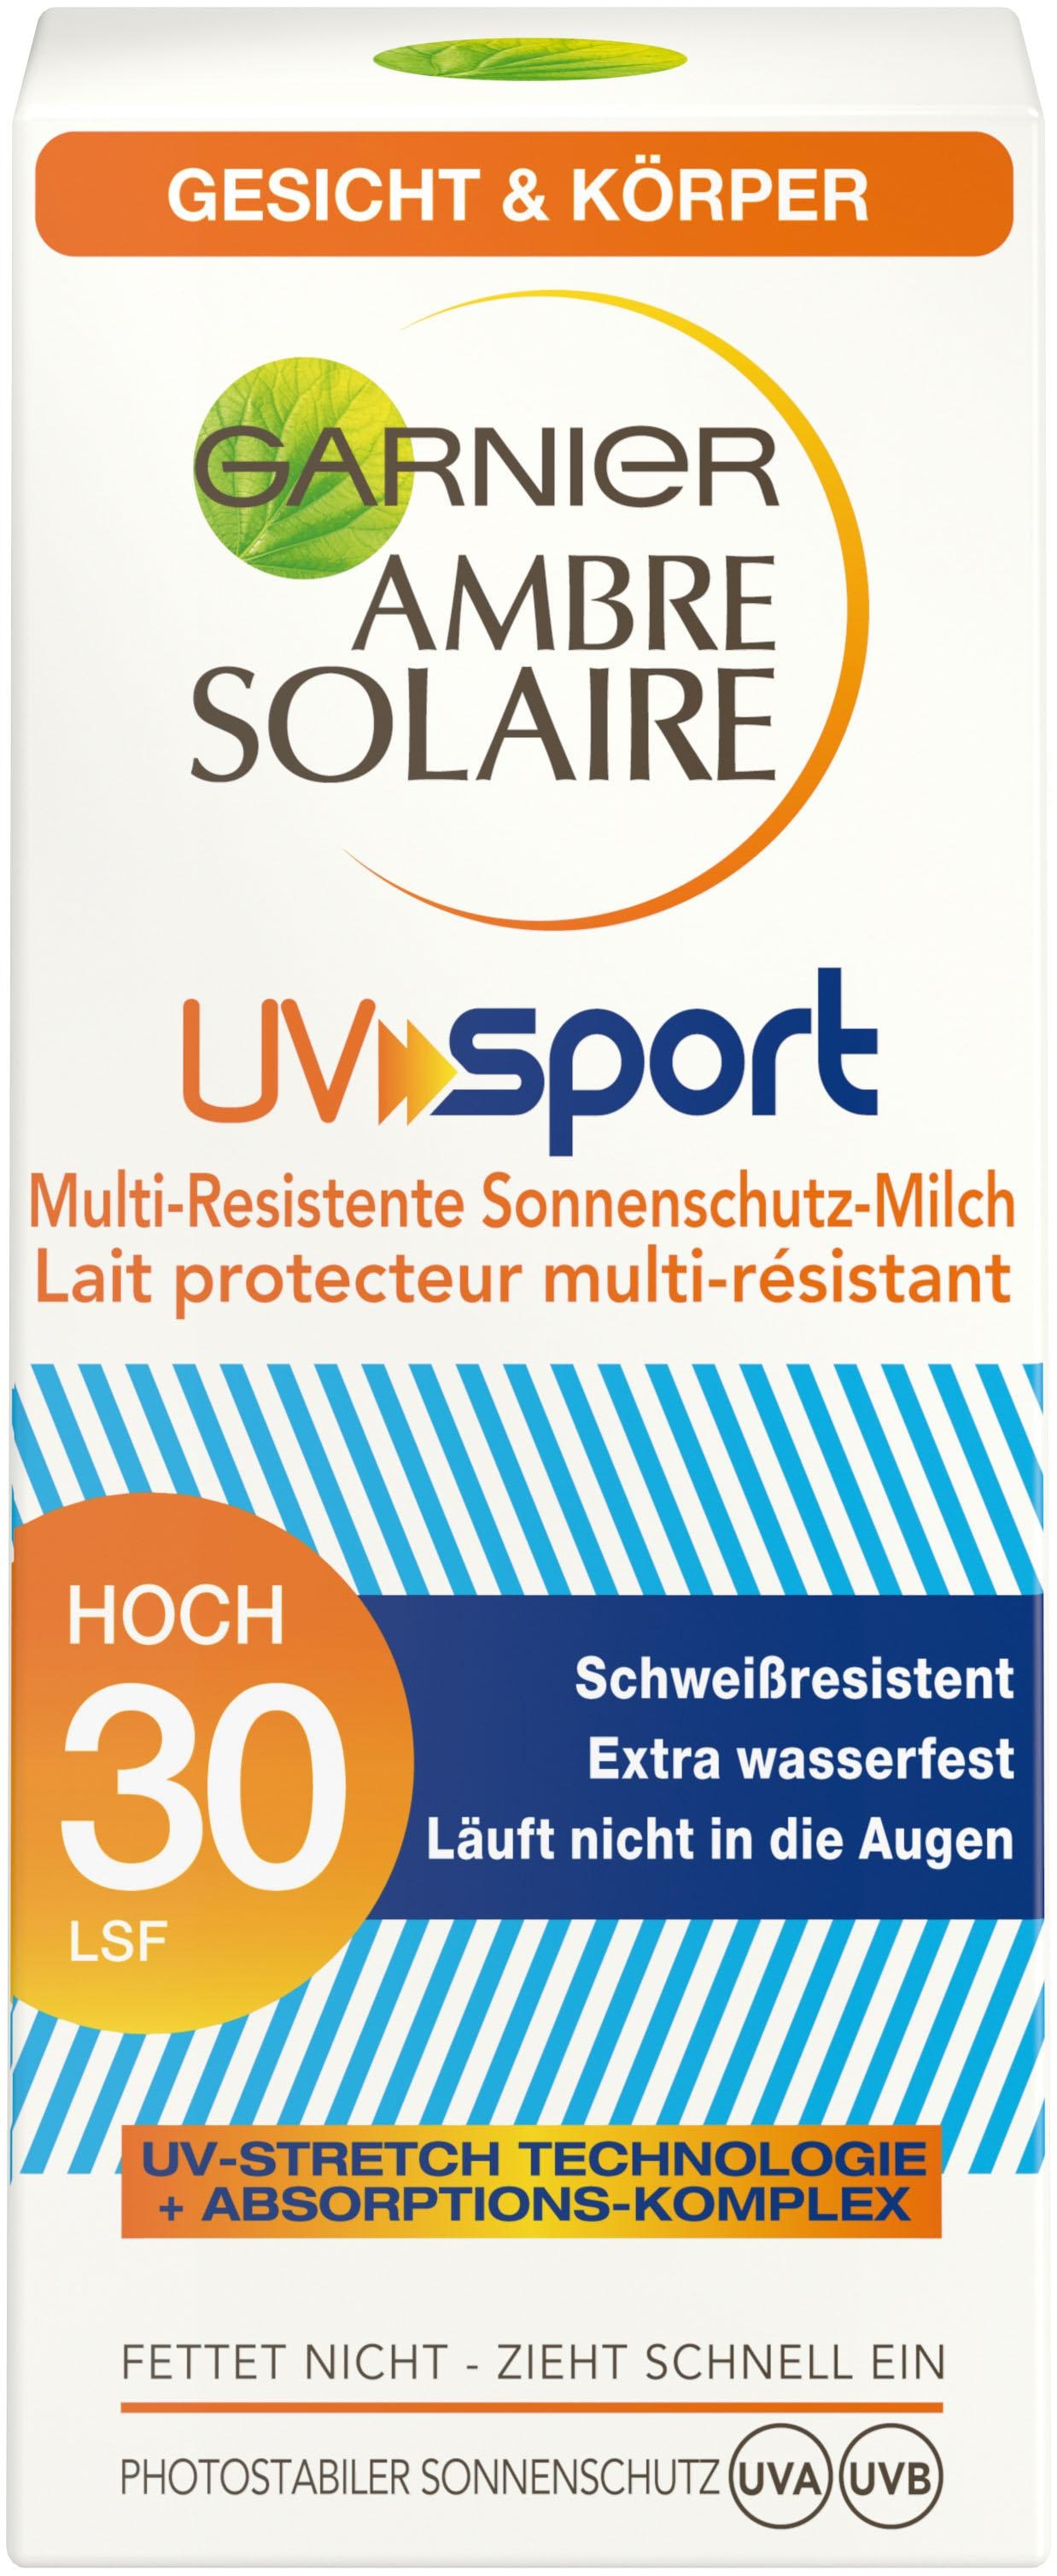 GARNIER Sonnenschutzmilch »Ambre Solaire UV Sport Protection LSF 30« bei